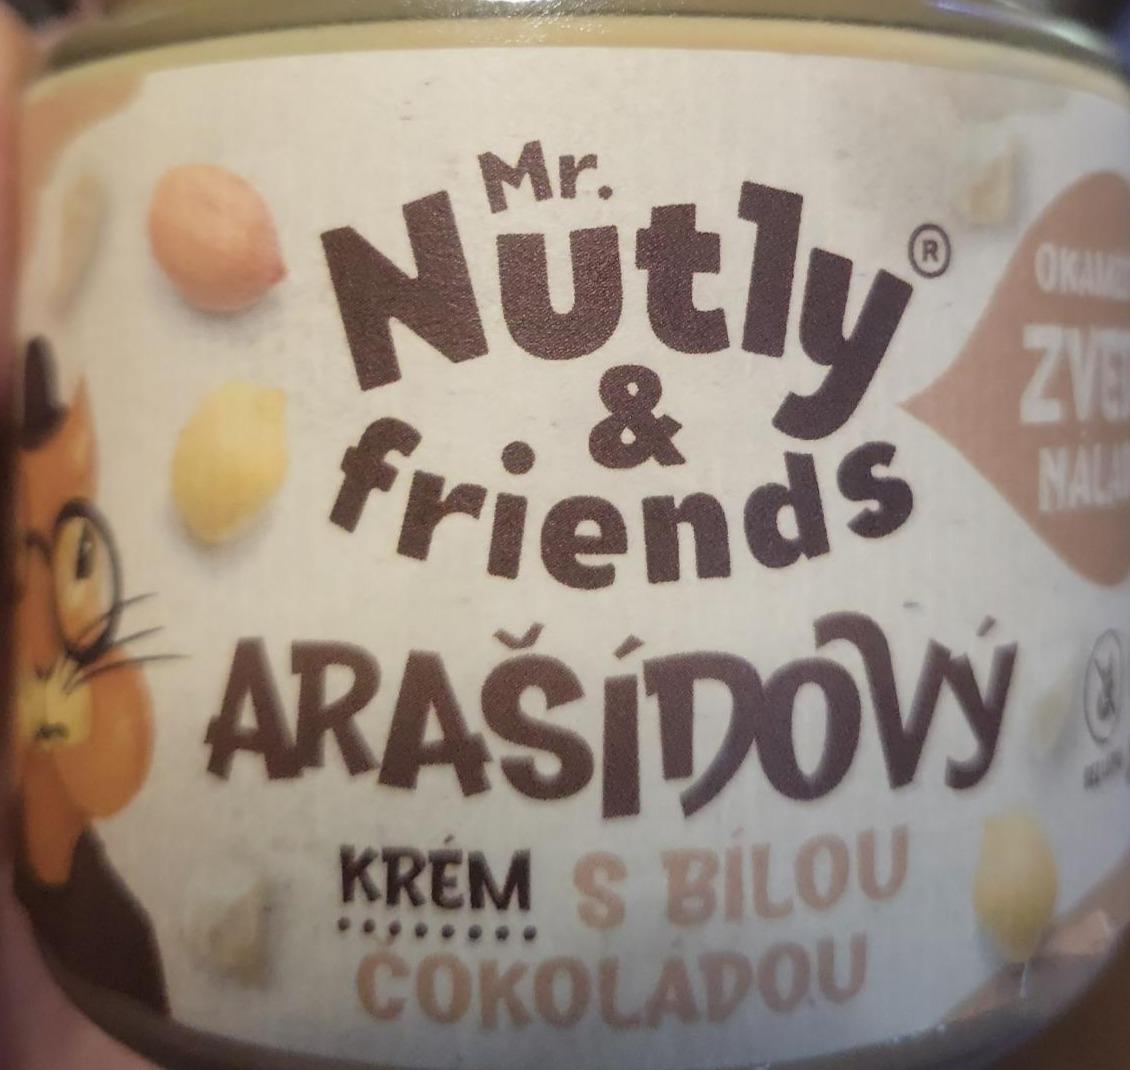 Fotografie - Arašídový krém s bílou čokoládou Mr. Nutly & Friends